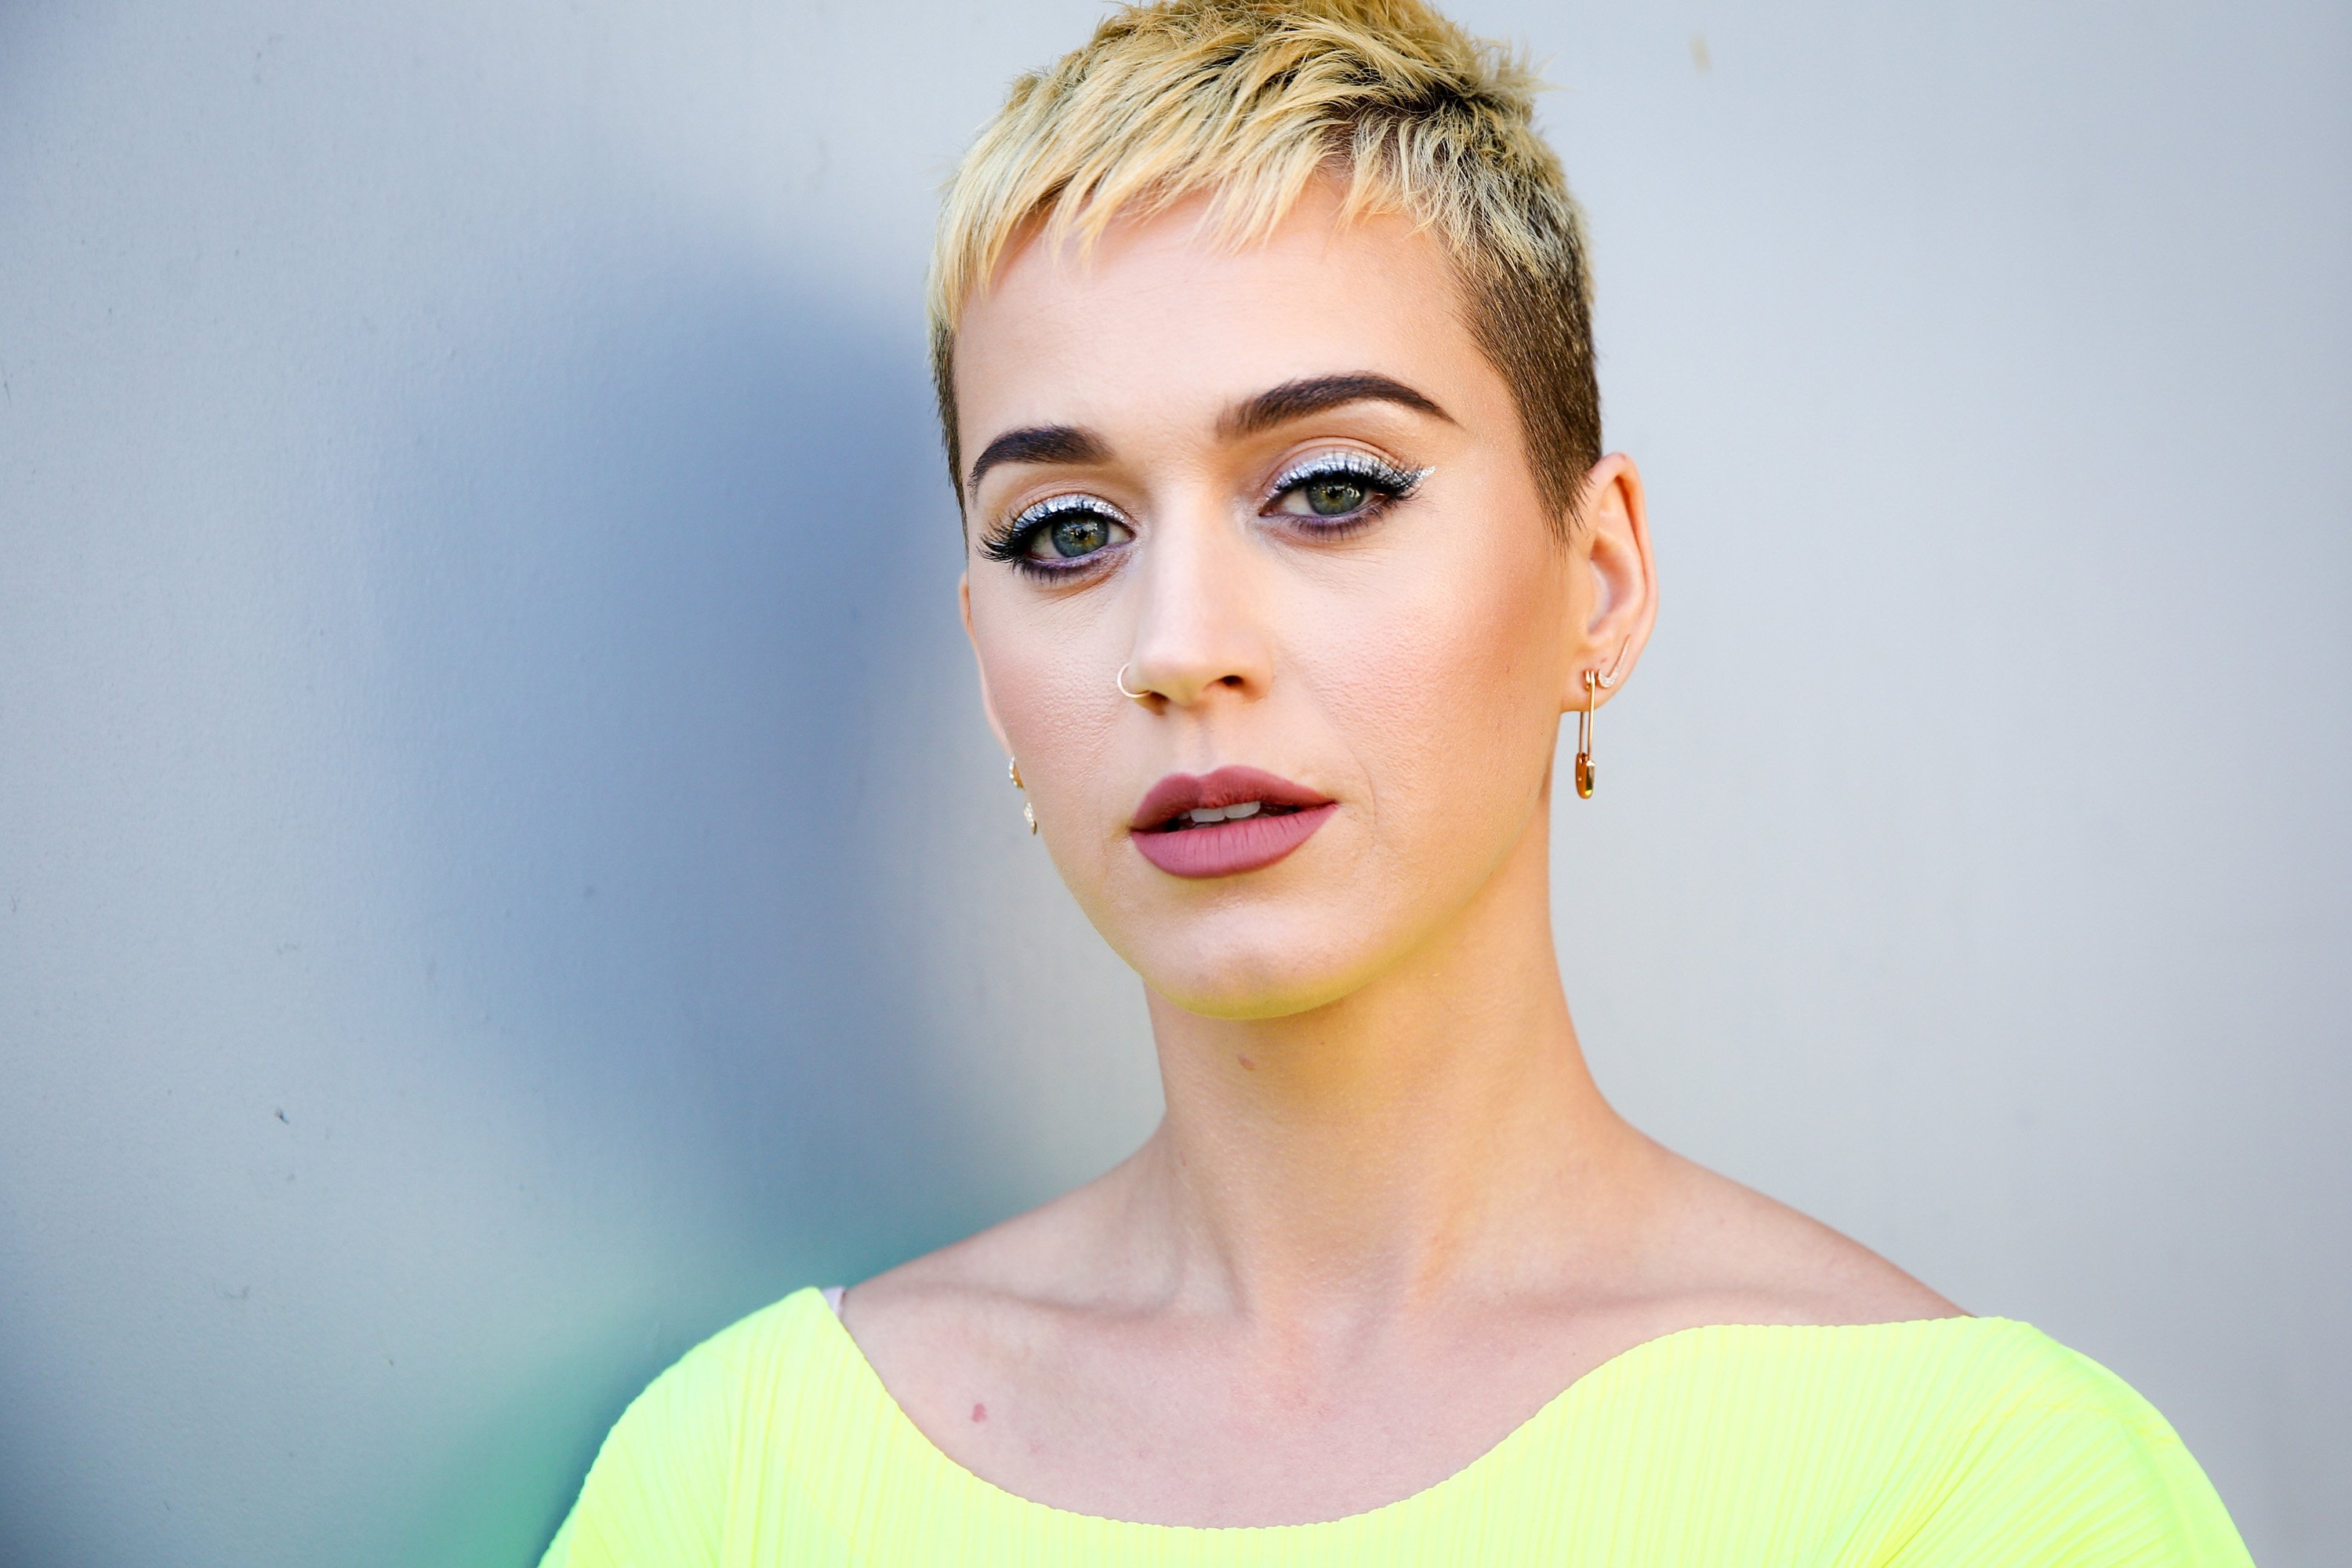 Katy Perry convidou drags queens de RuPaul para novo clipe